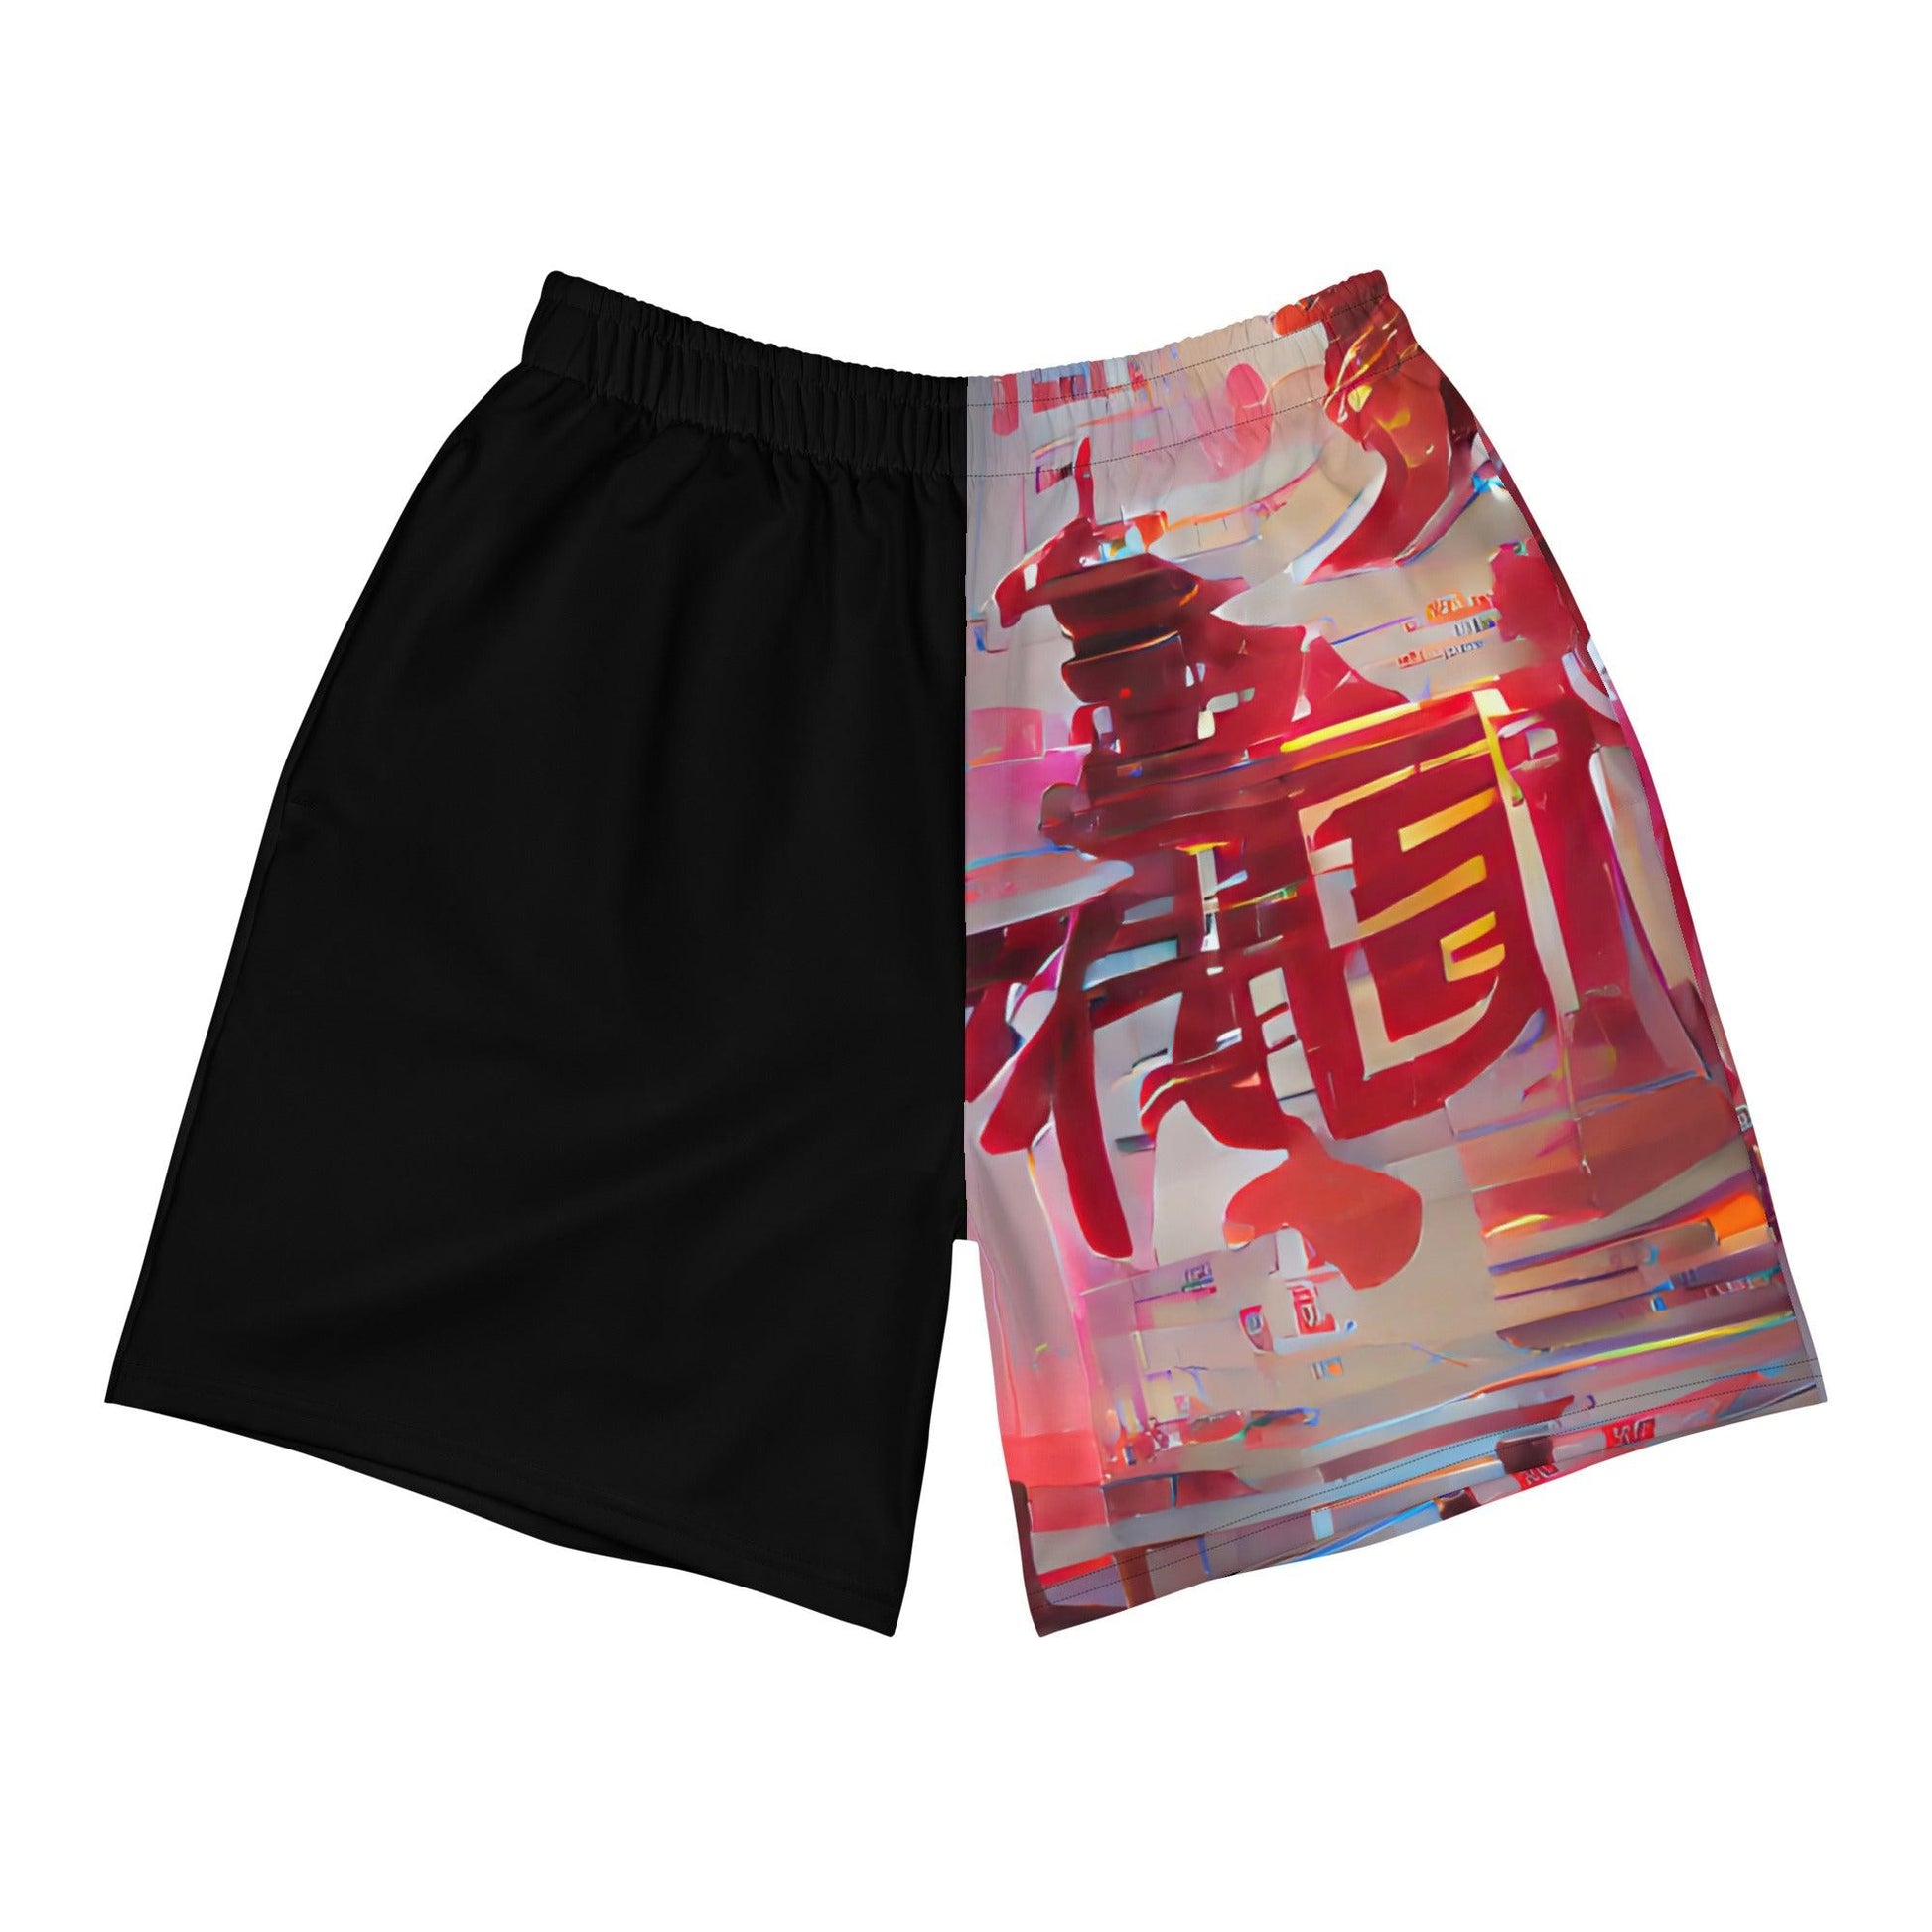 Half Black Half Baijiu - Mens Athletic Shorts - iSAW Company